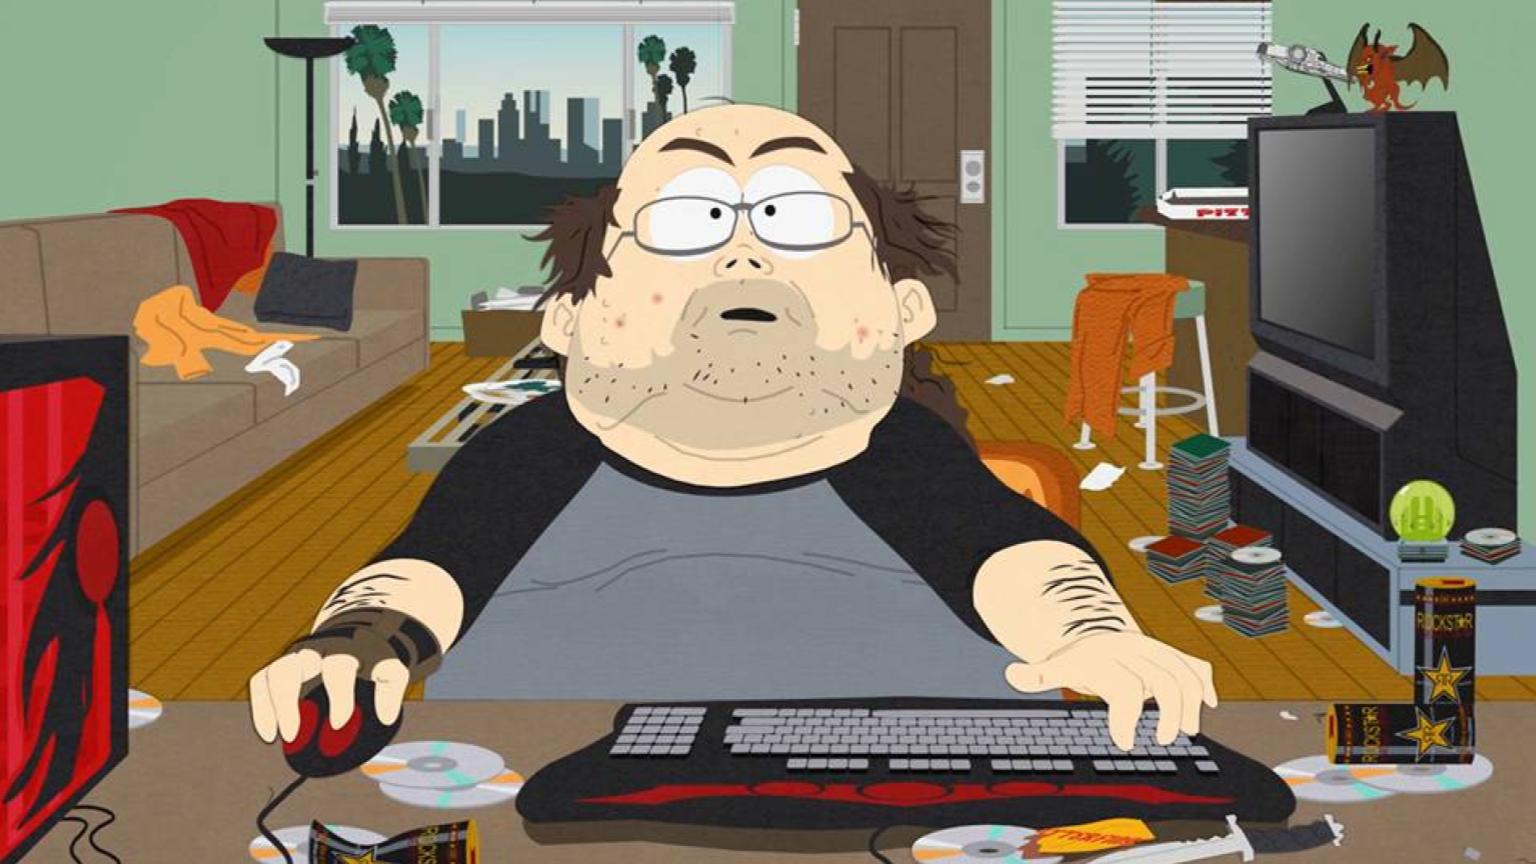 Chico jugador de ‘South Park’ / Nerd gordo de las computadoras